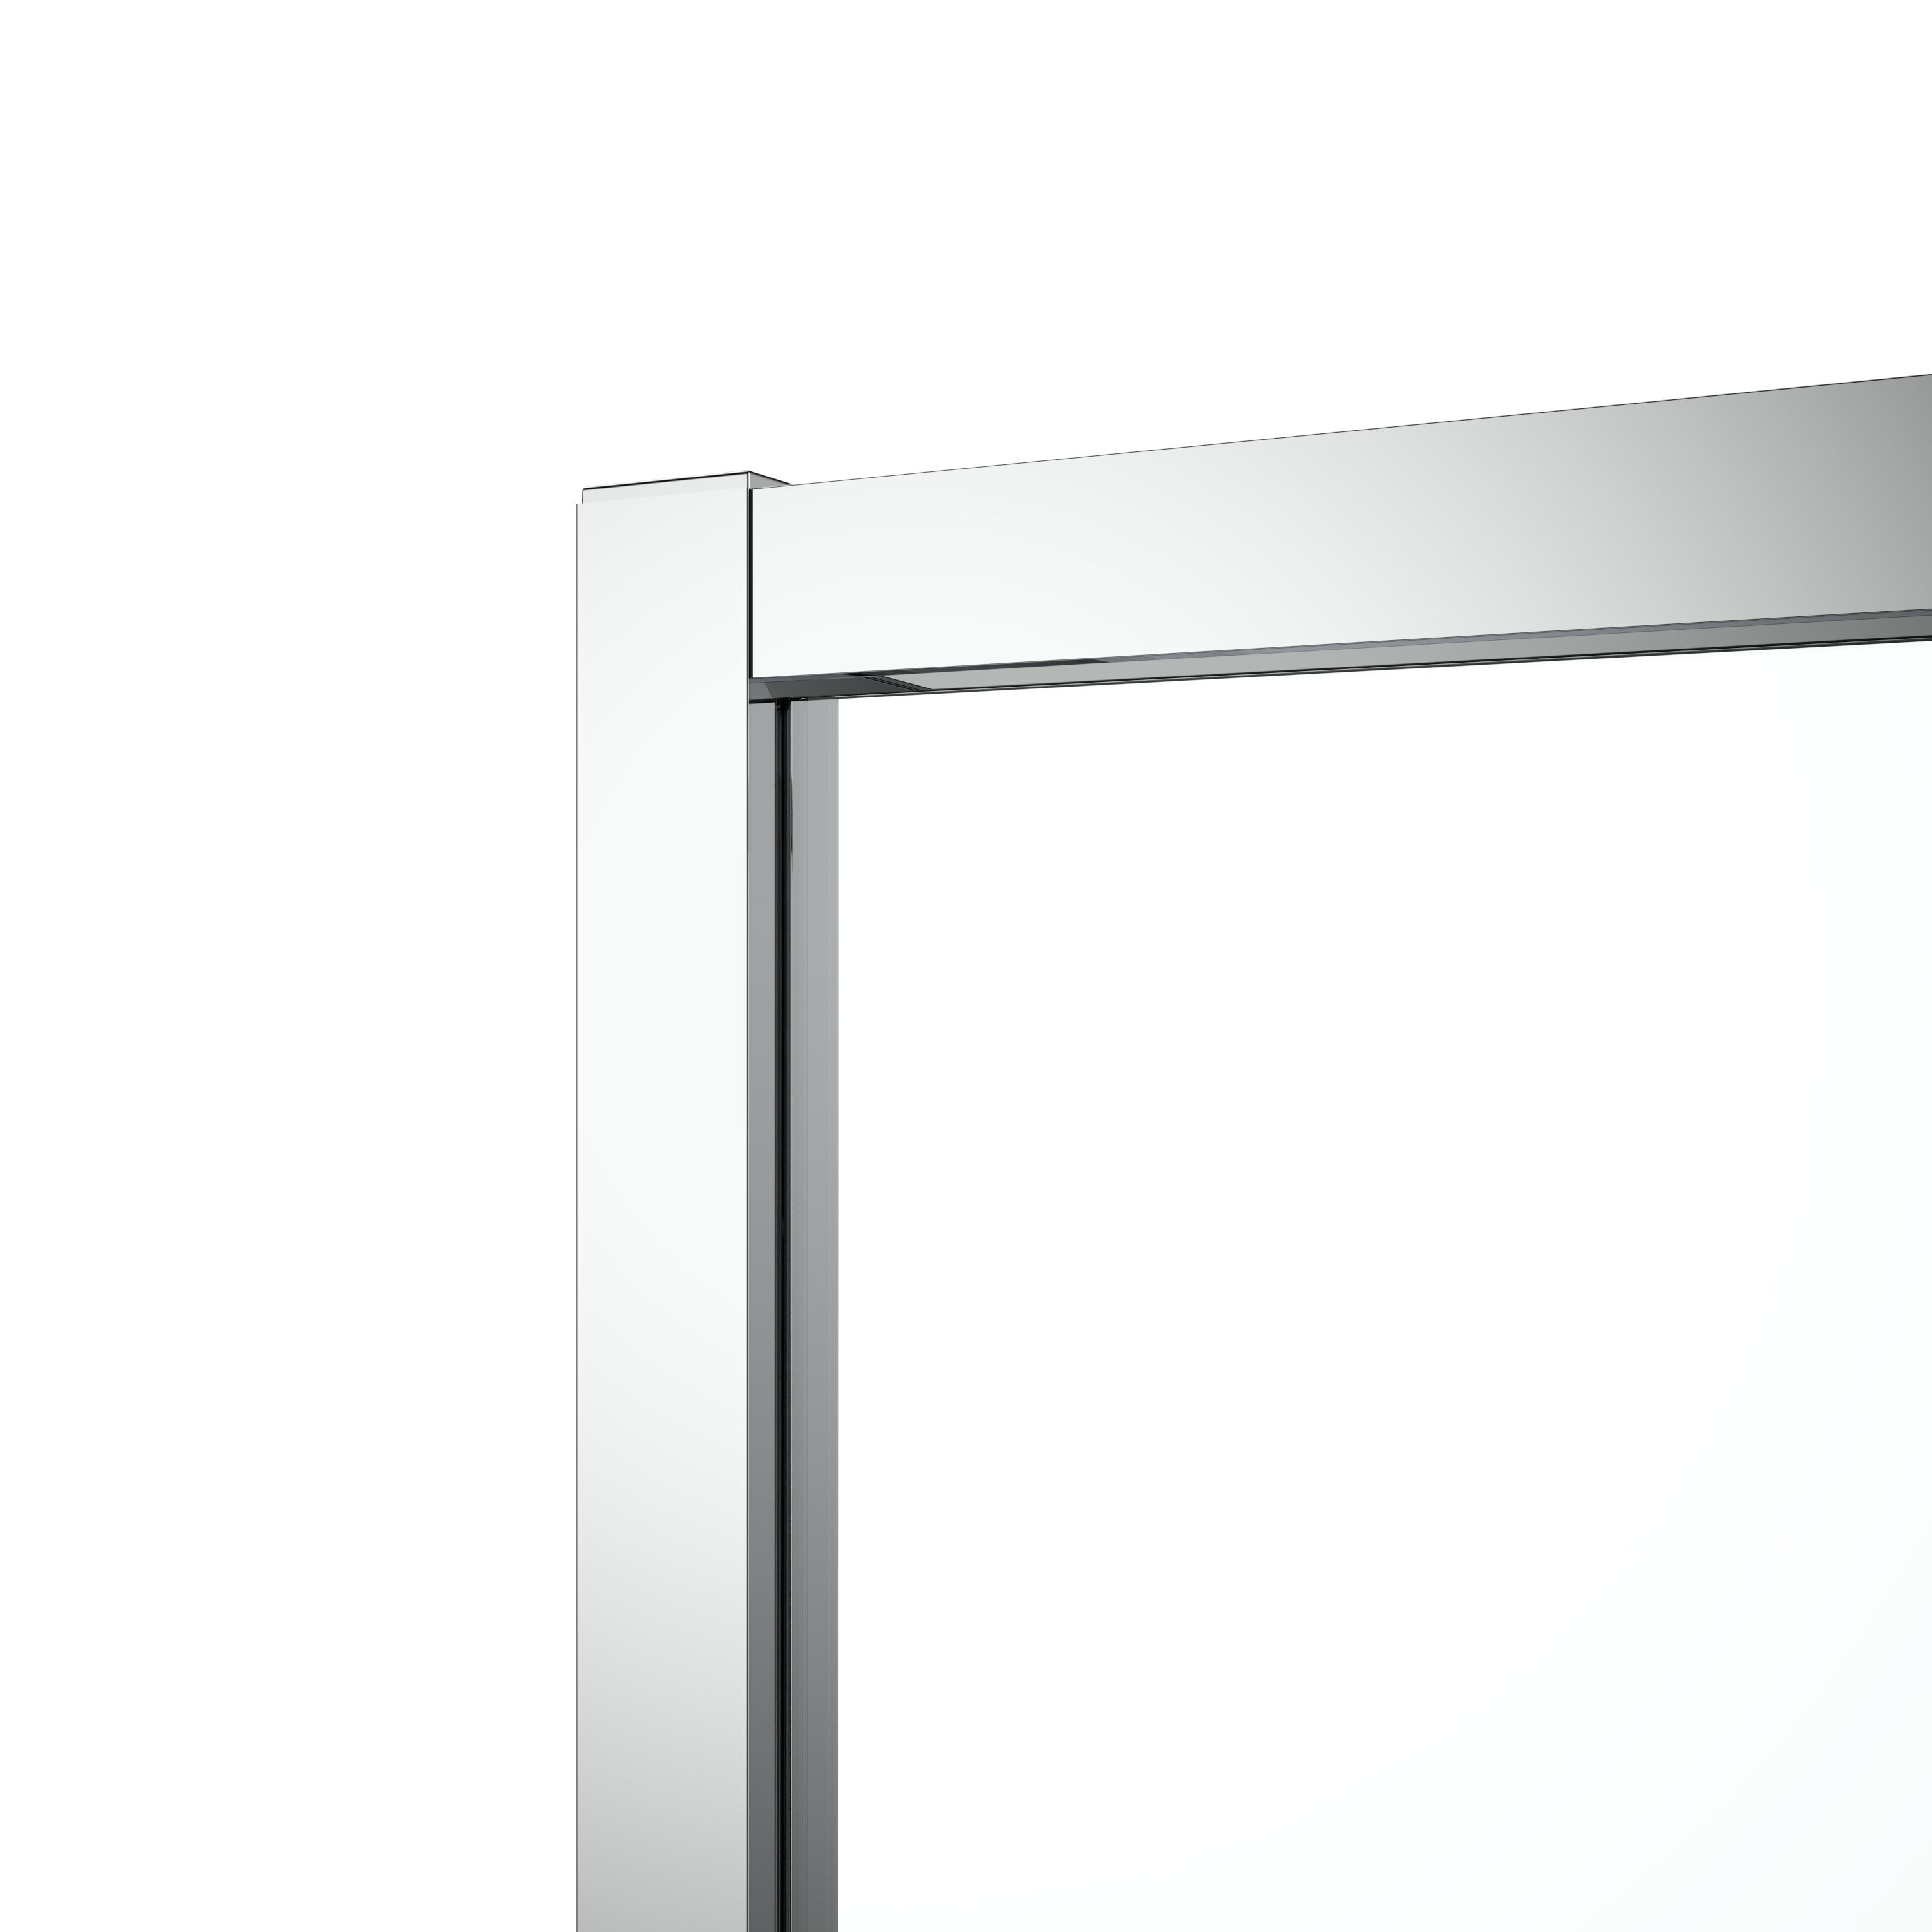 GoodHome Ledava Framed Semi-mirrored Chrome effect Square Shower enclosure - Corner entry double sliding door (W)80cm (D)80cm